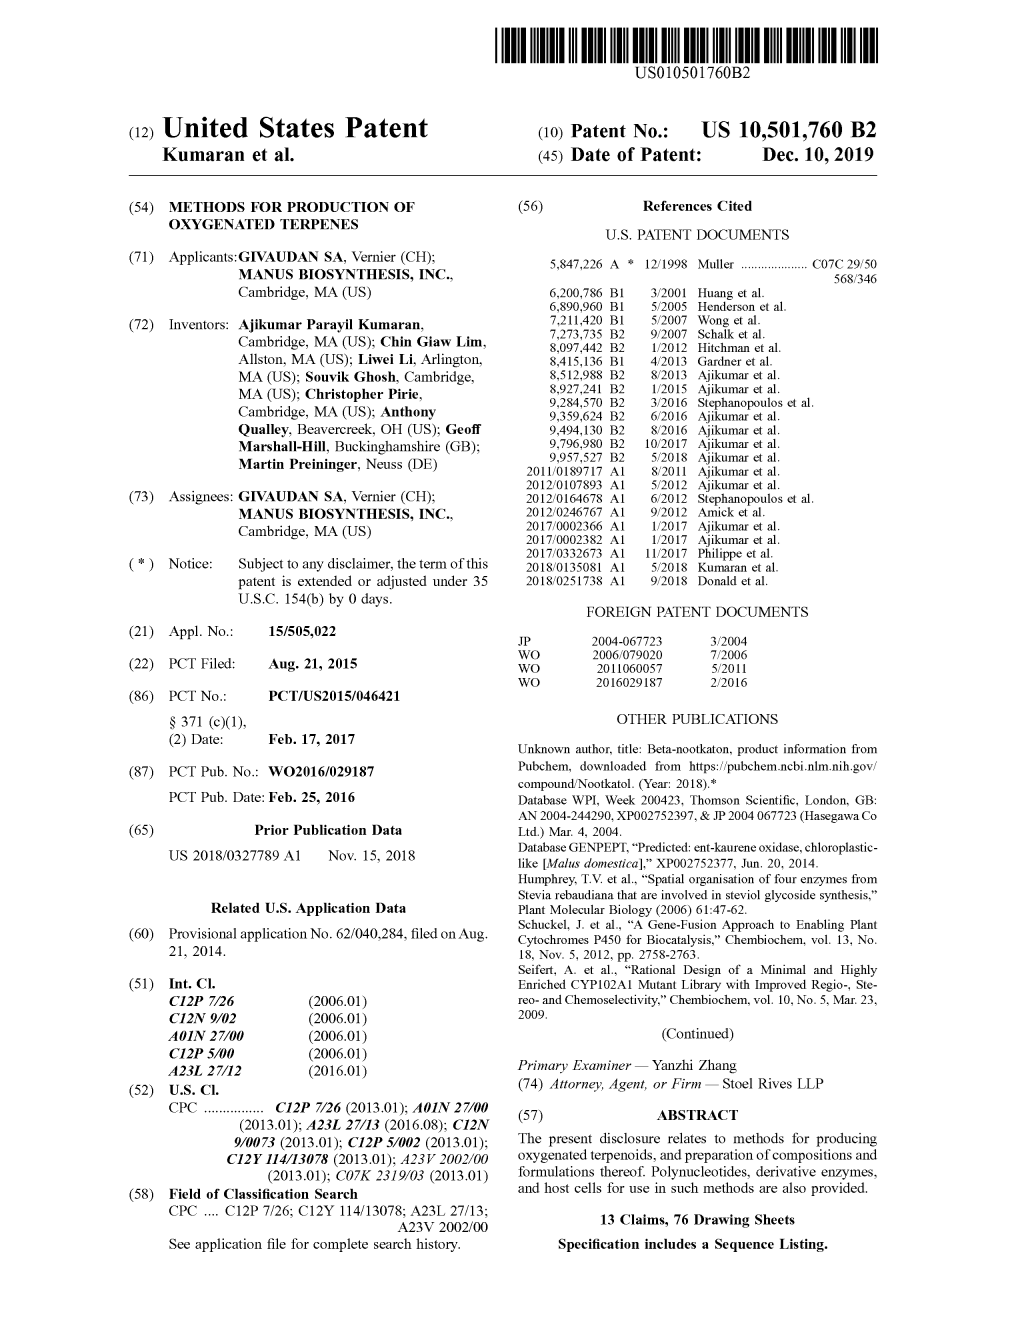 United States Patent (10 ) Patent No.: US 10,501,760 B2 Kumaran Et Al